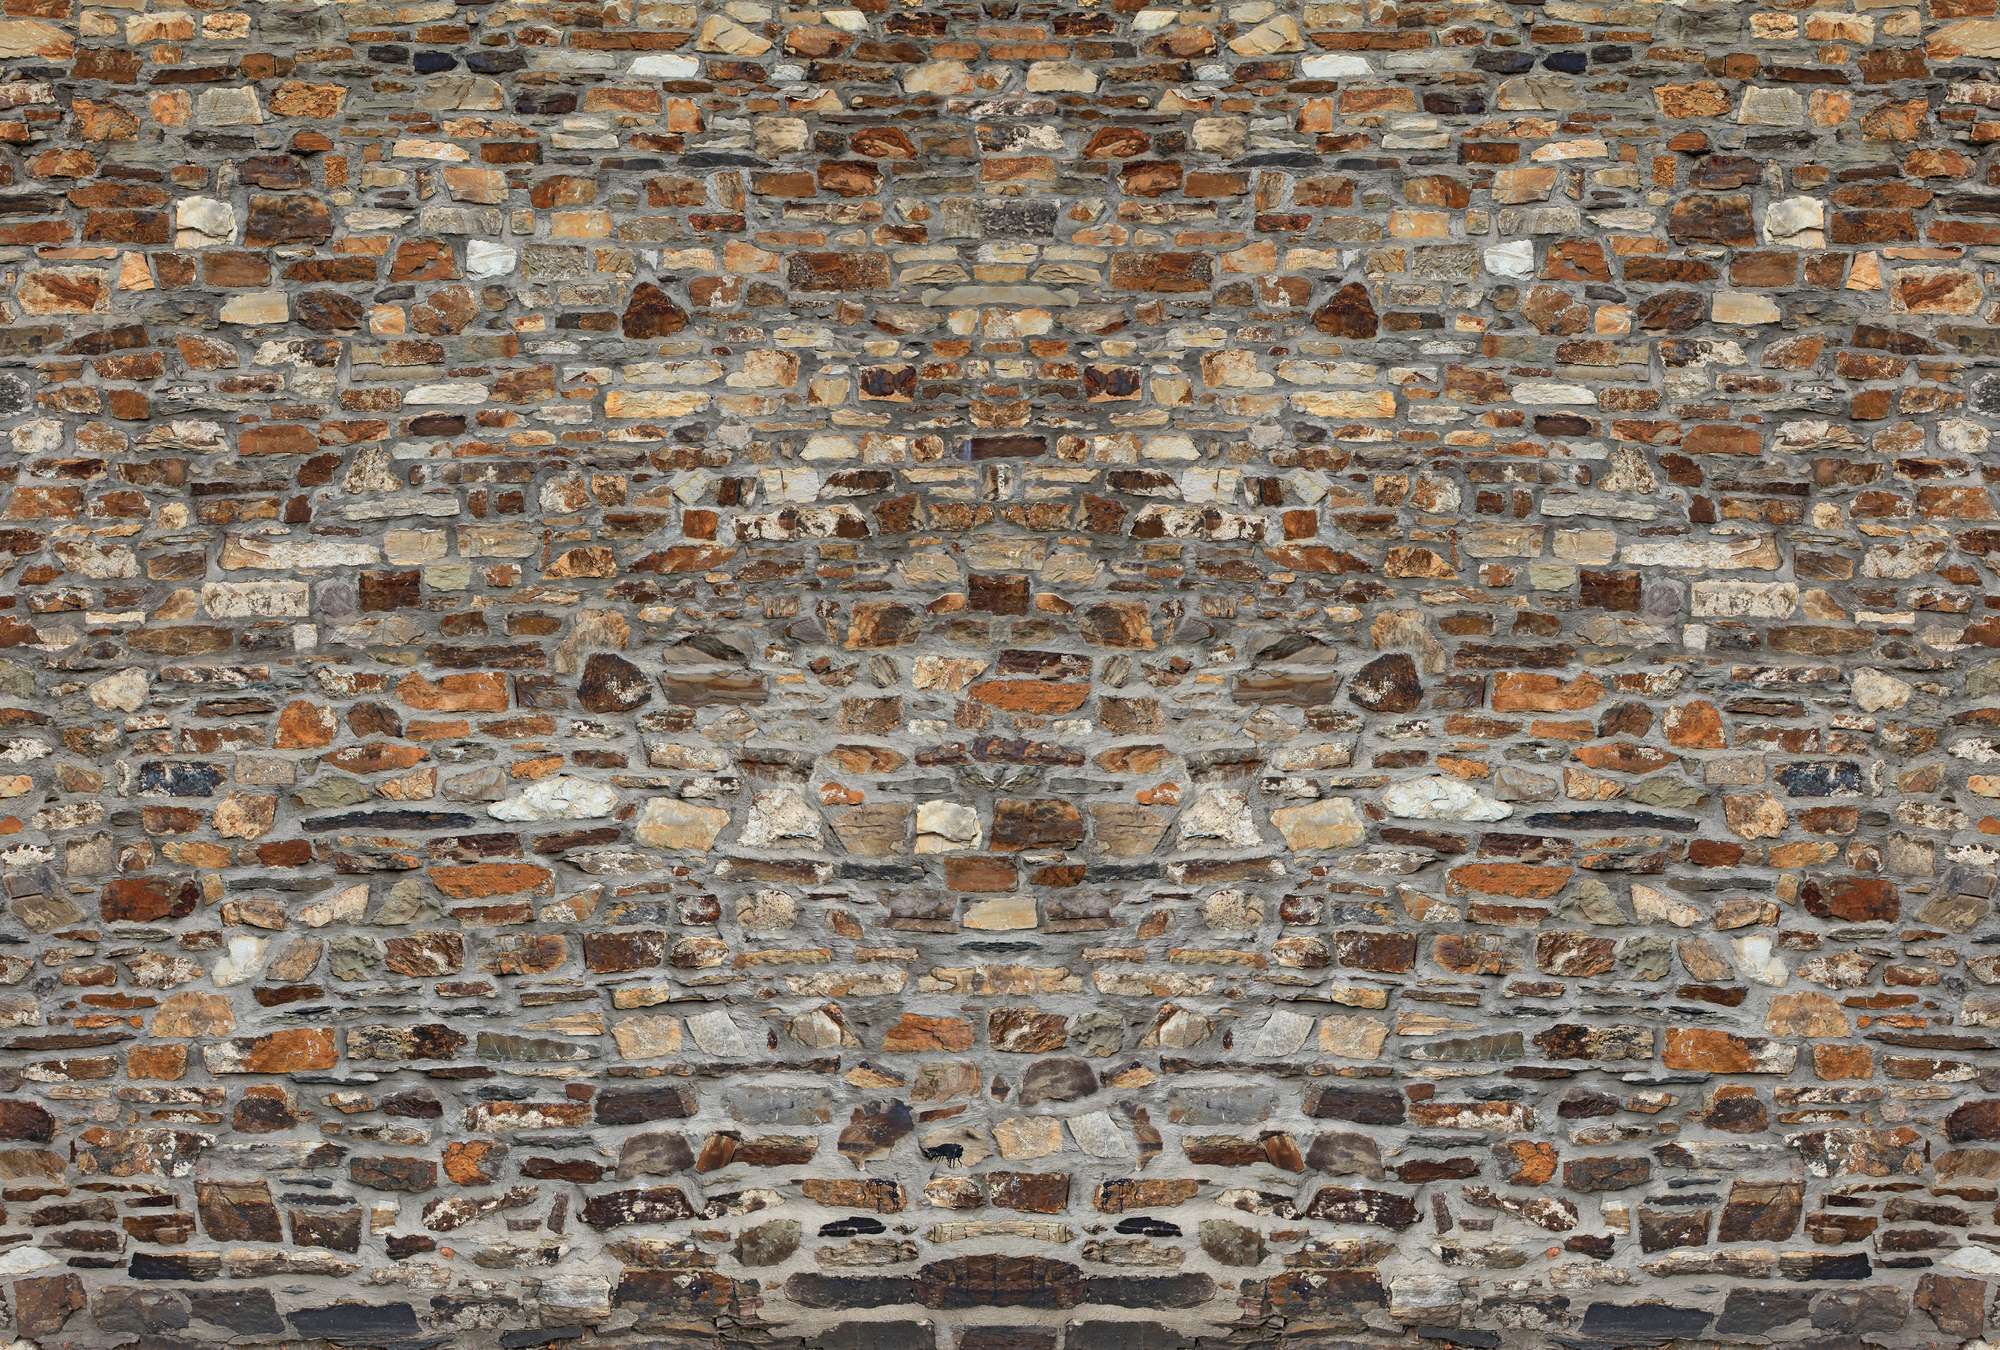             Fotomurali 3D Muro di mattoni antichi e pietra rustica
        